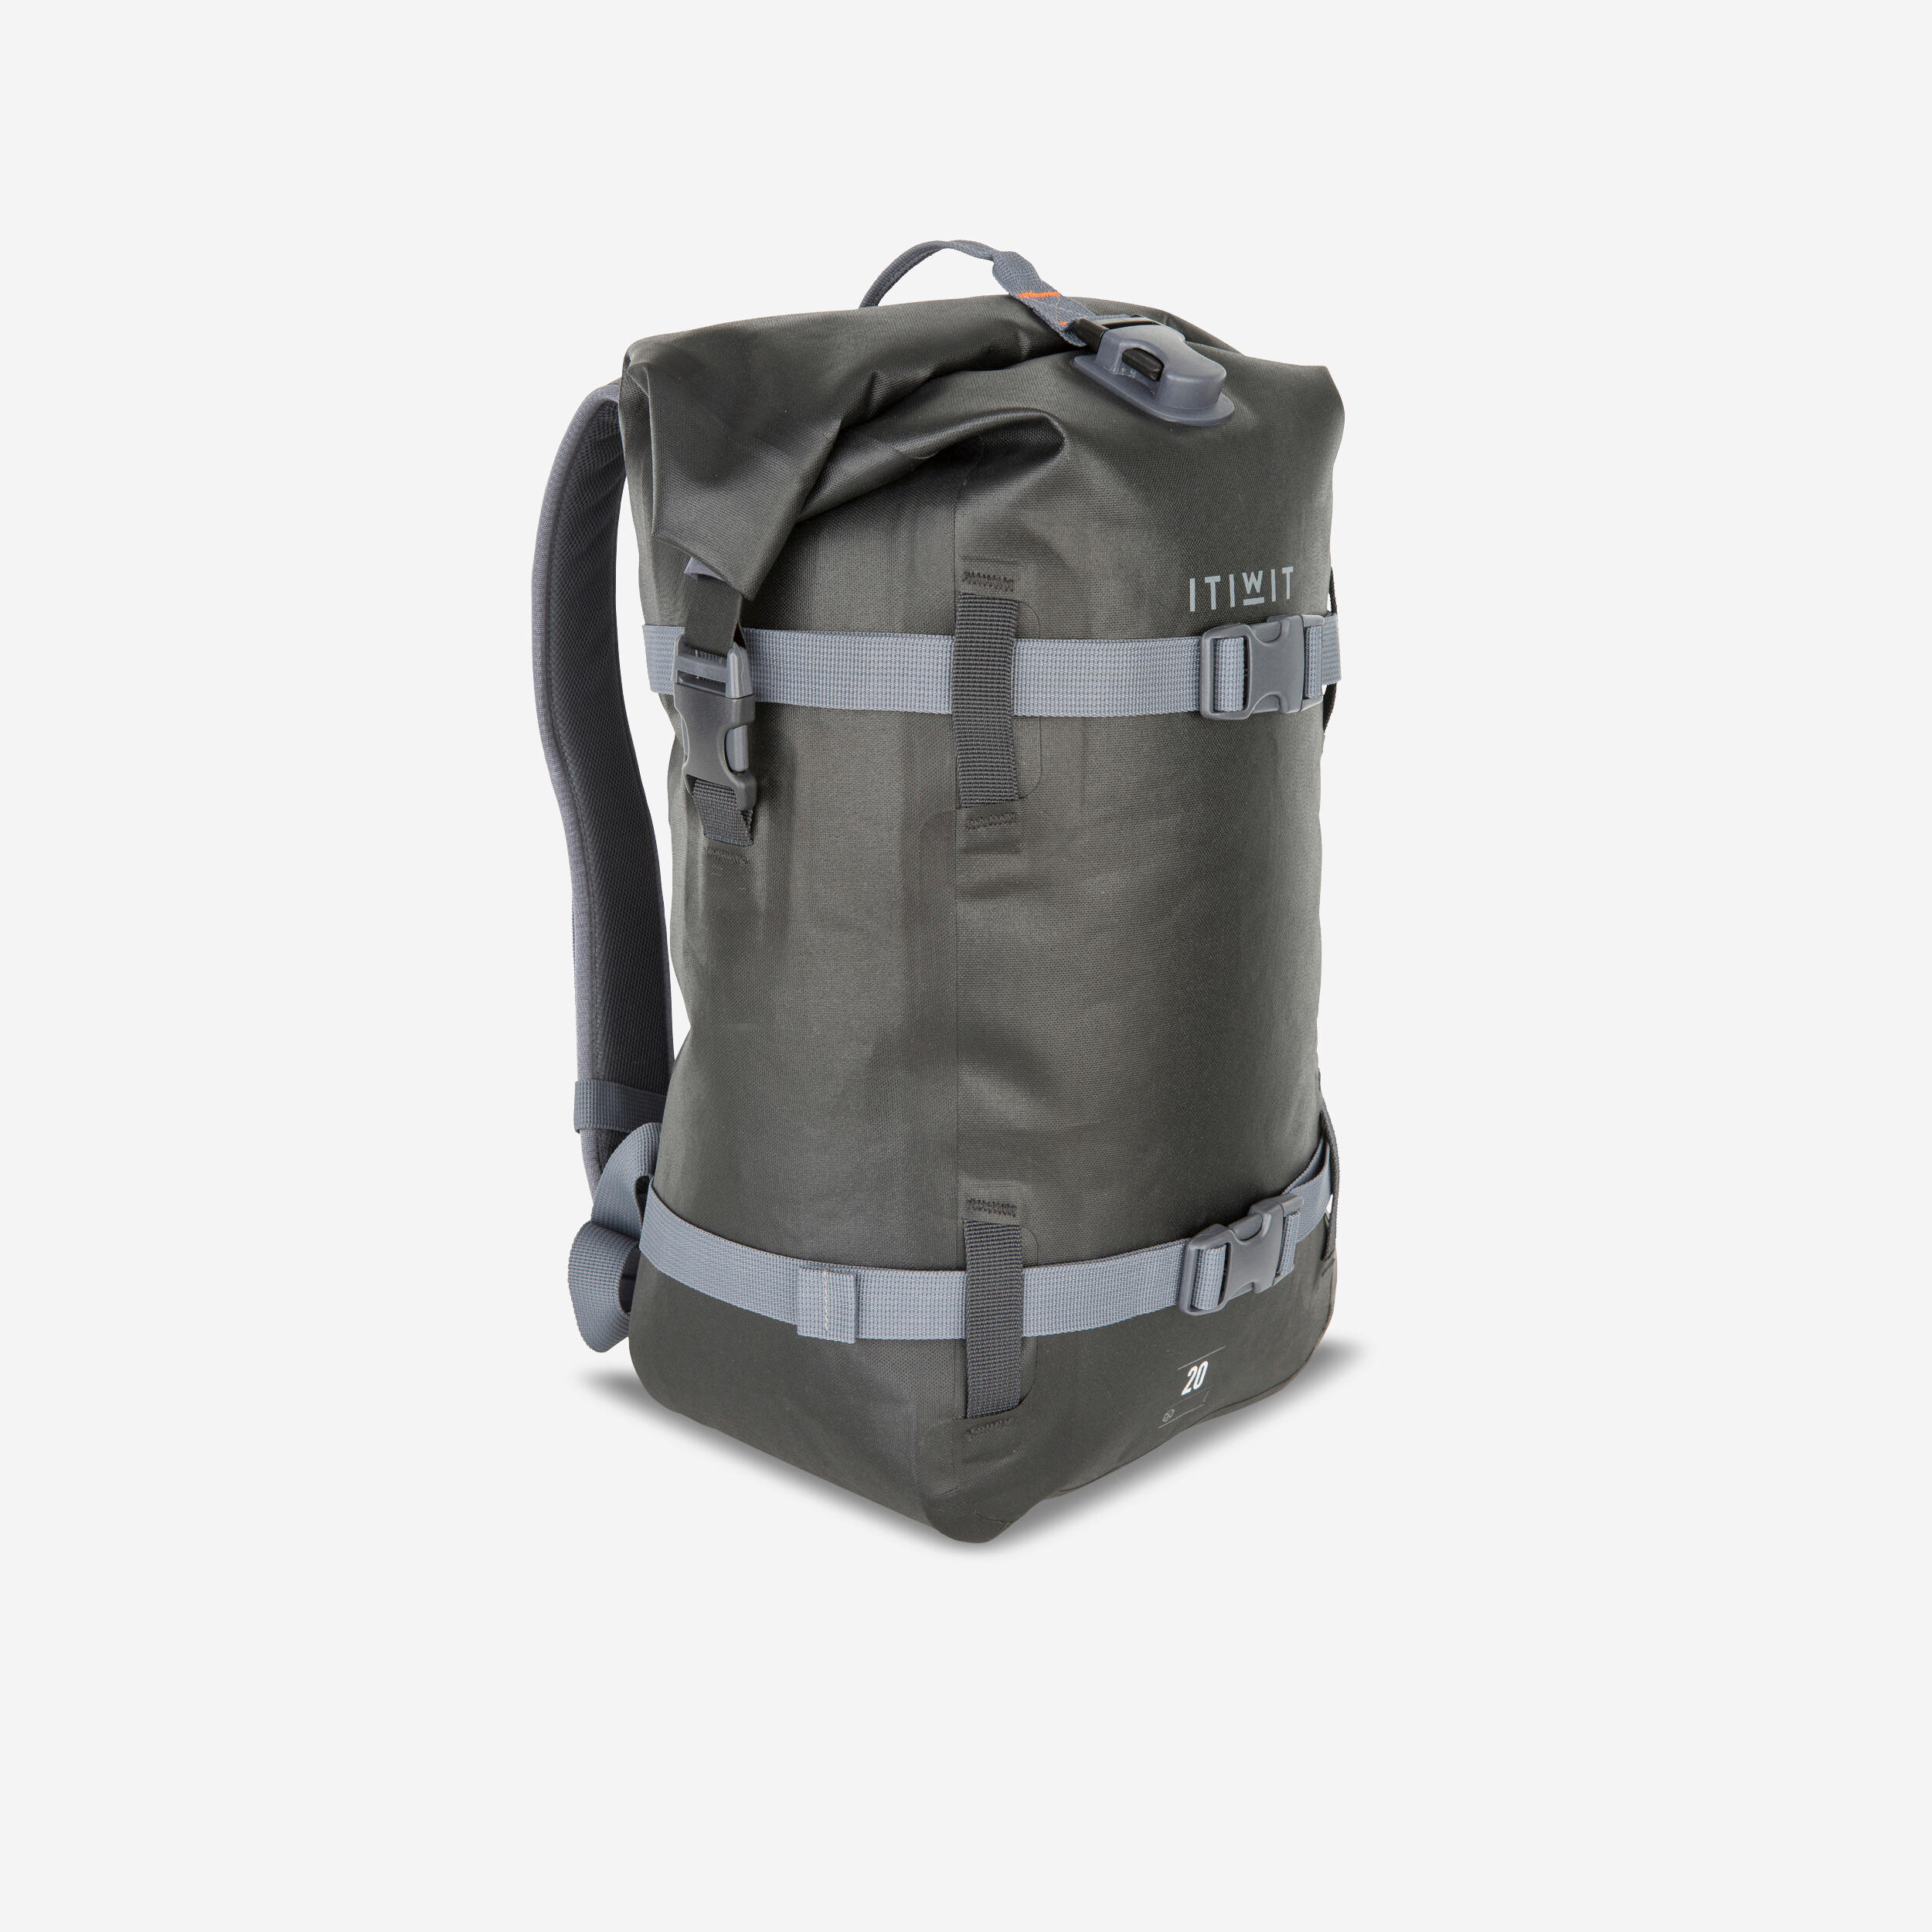 HARIMAHENDRA Backpack Cover Rain Bag Cover Waterproof (Cover Only),Bag  cover for rain,Raincover for school